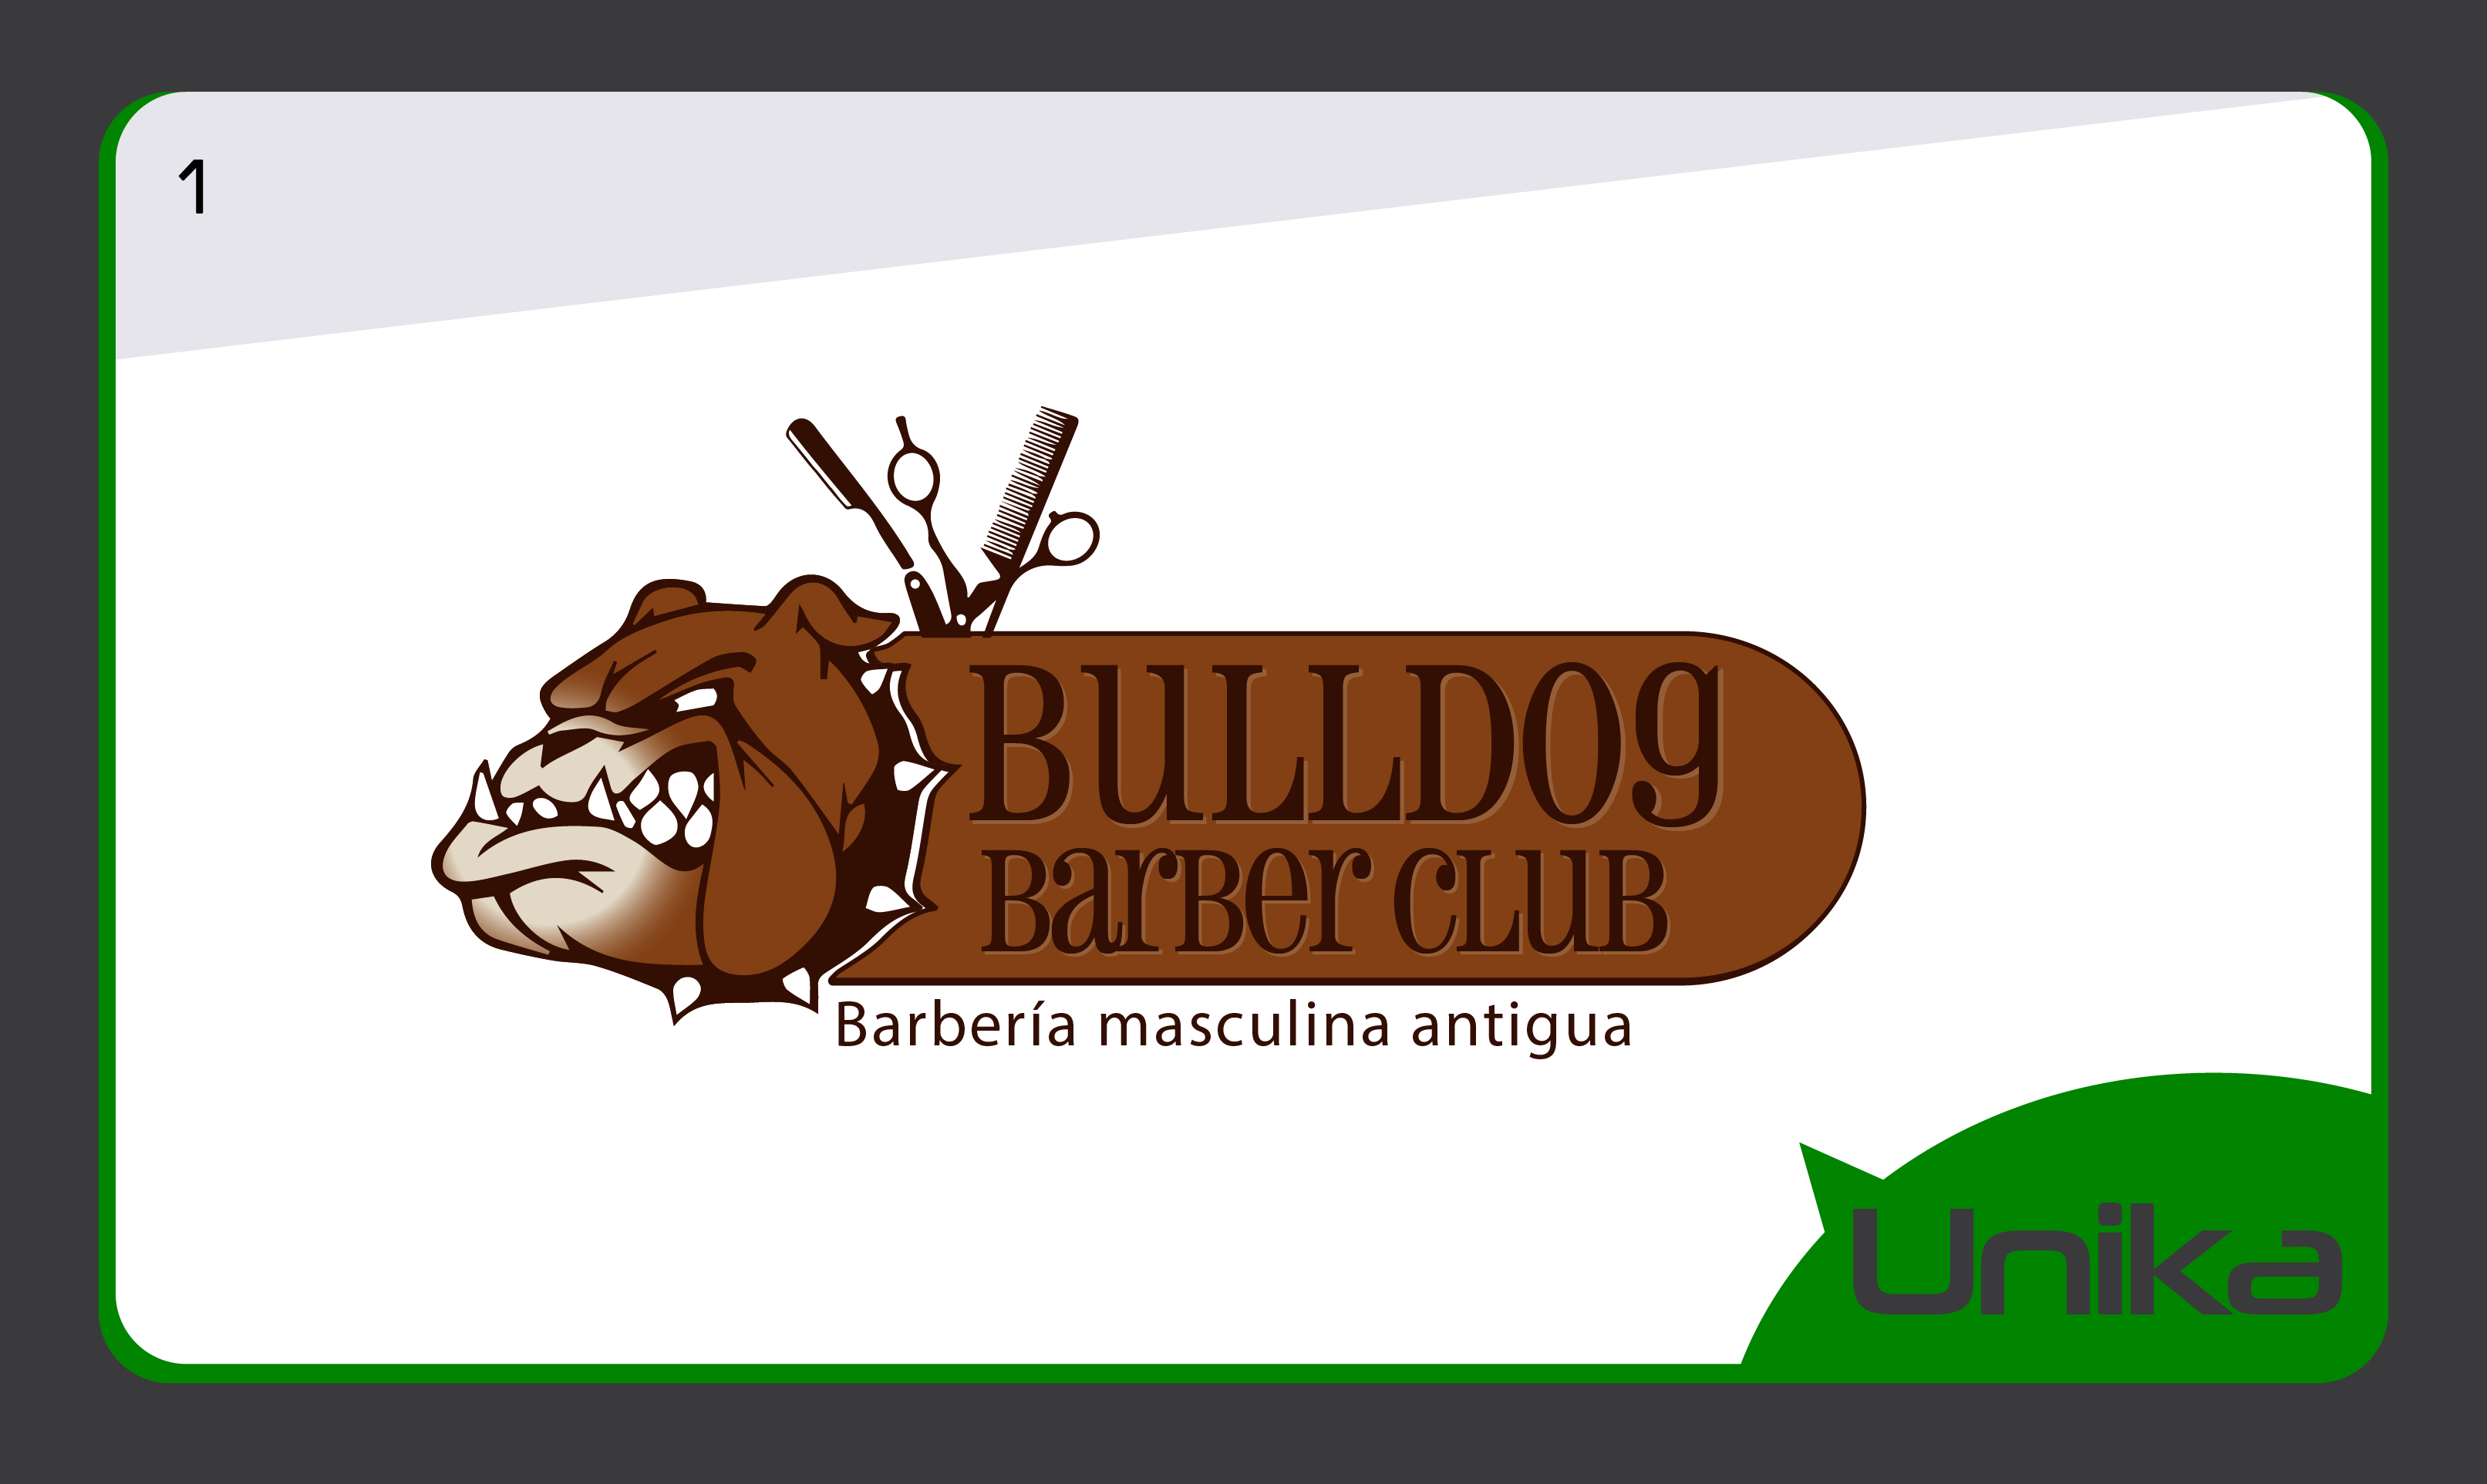 Bulldog barber club